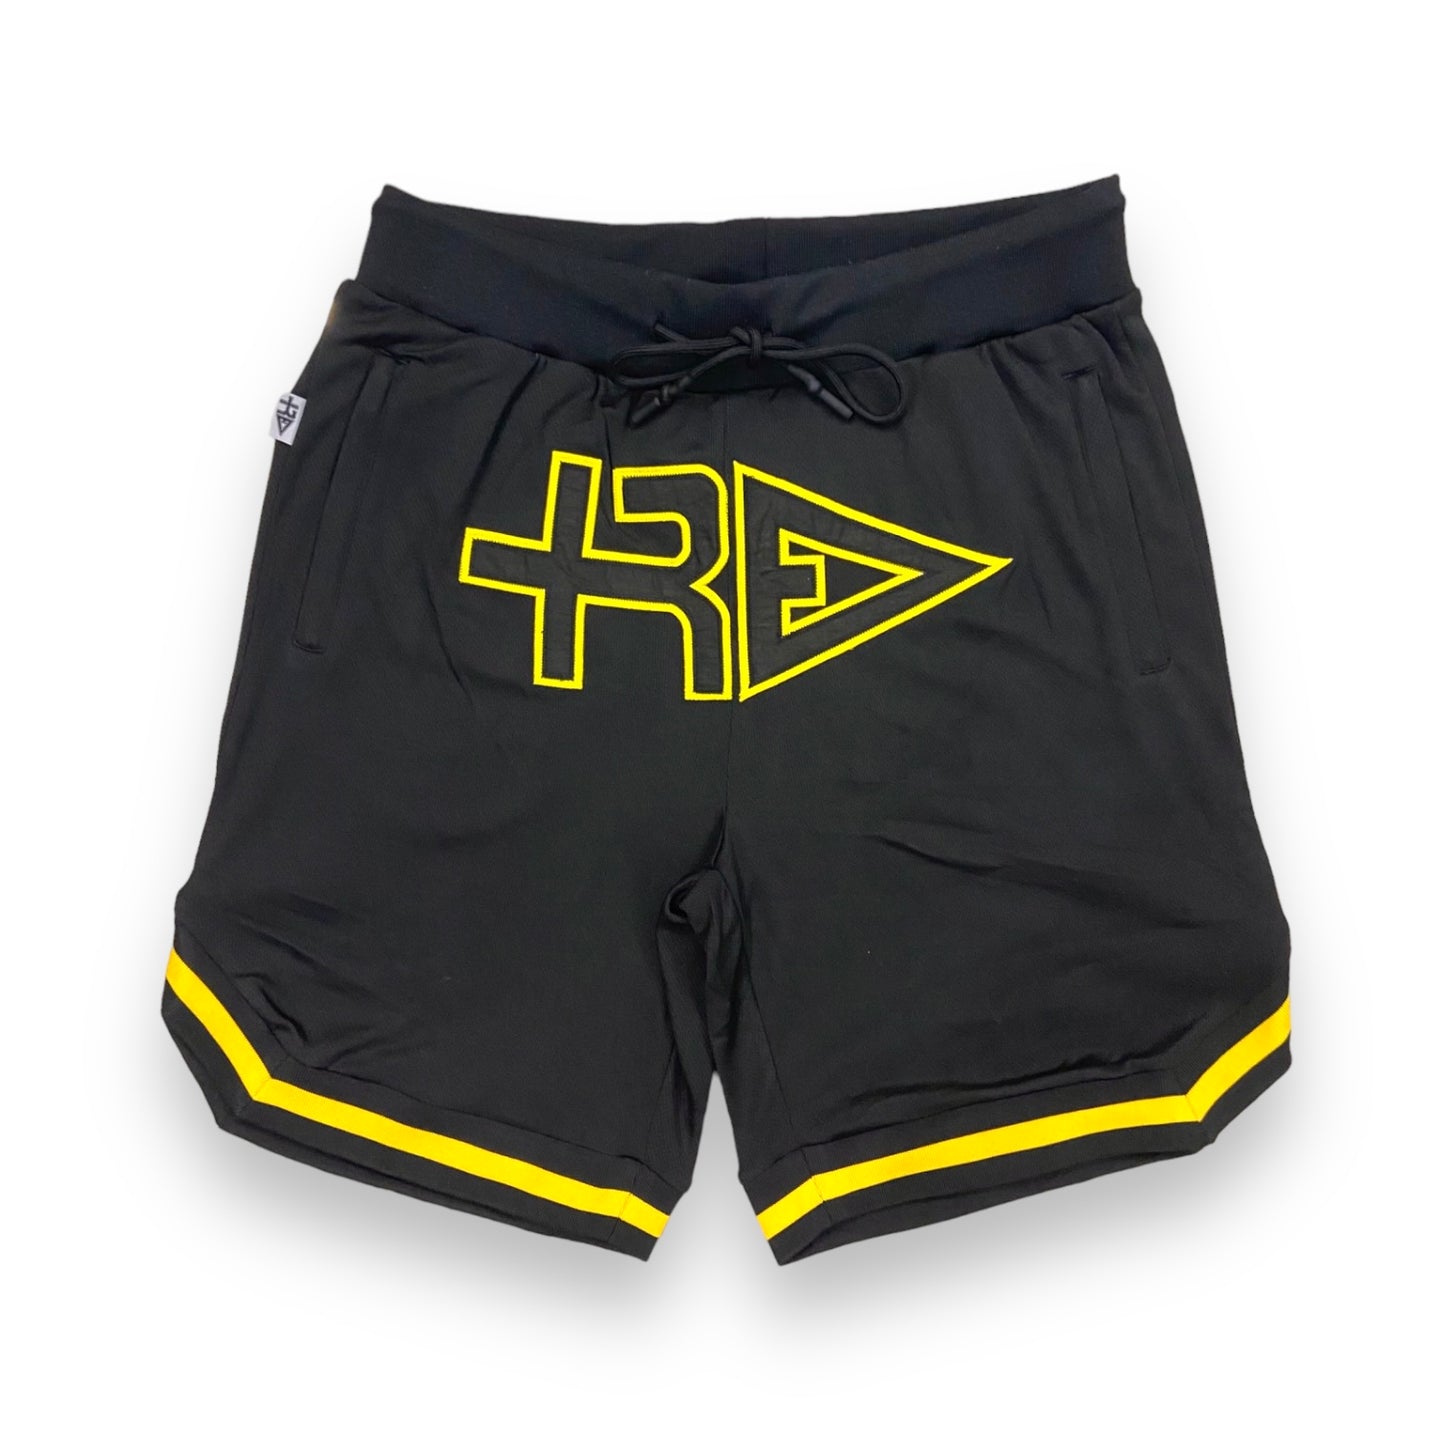 tREv Basketball Shorts - Black w/ Yellow